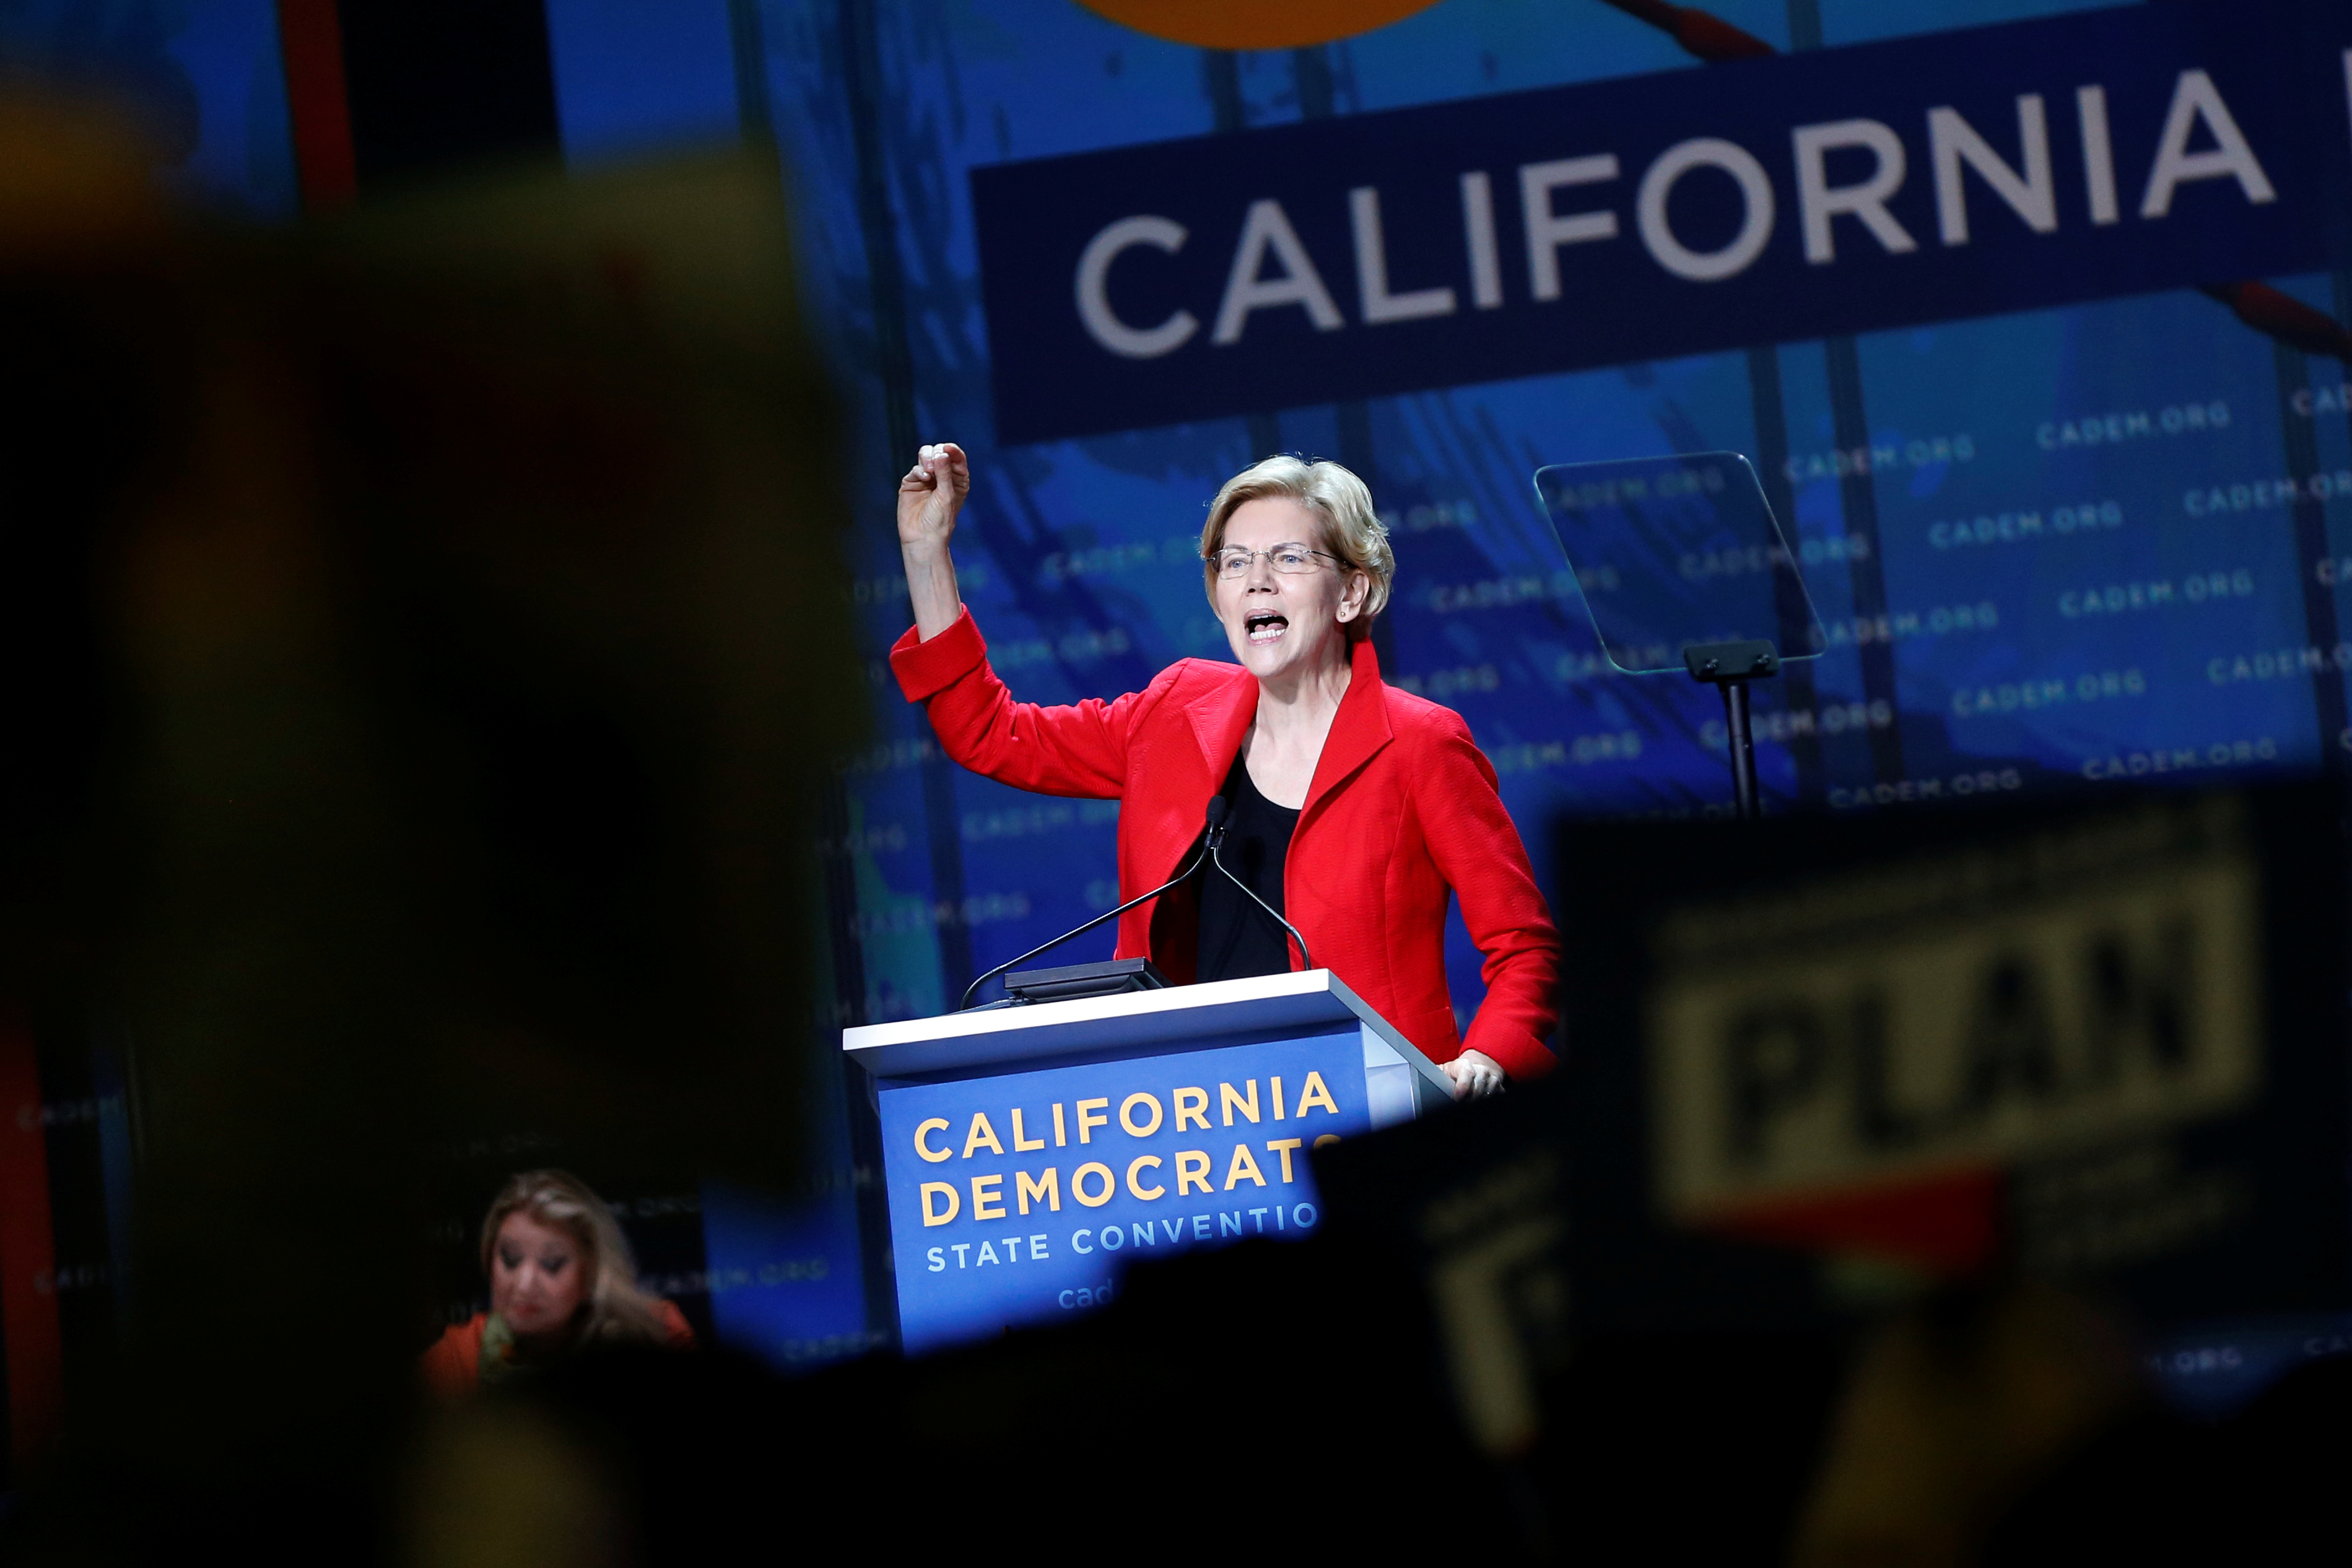 Democratic presidential candidate and U.S. Senator Elizabeth Warren (D-MA) speaks during the California Democratic Convention in San Francisco